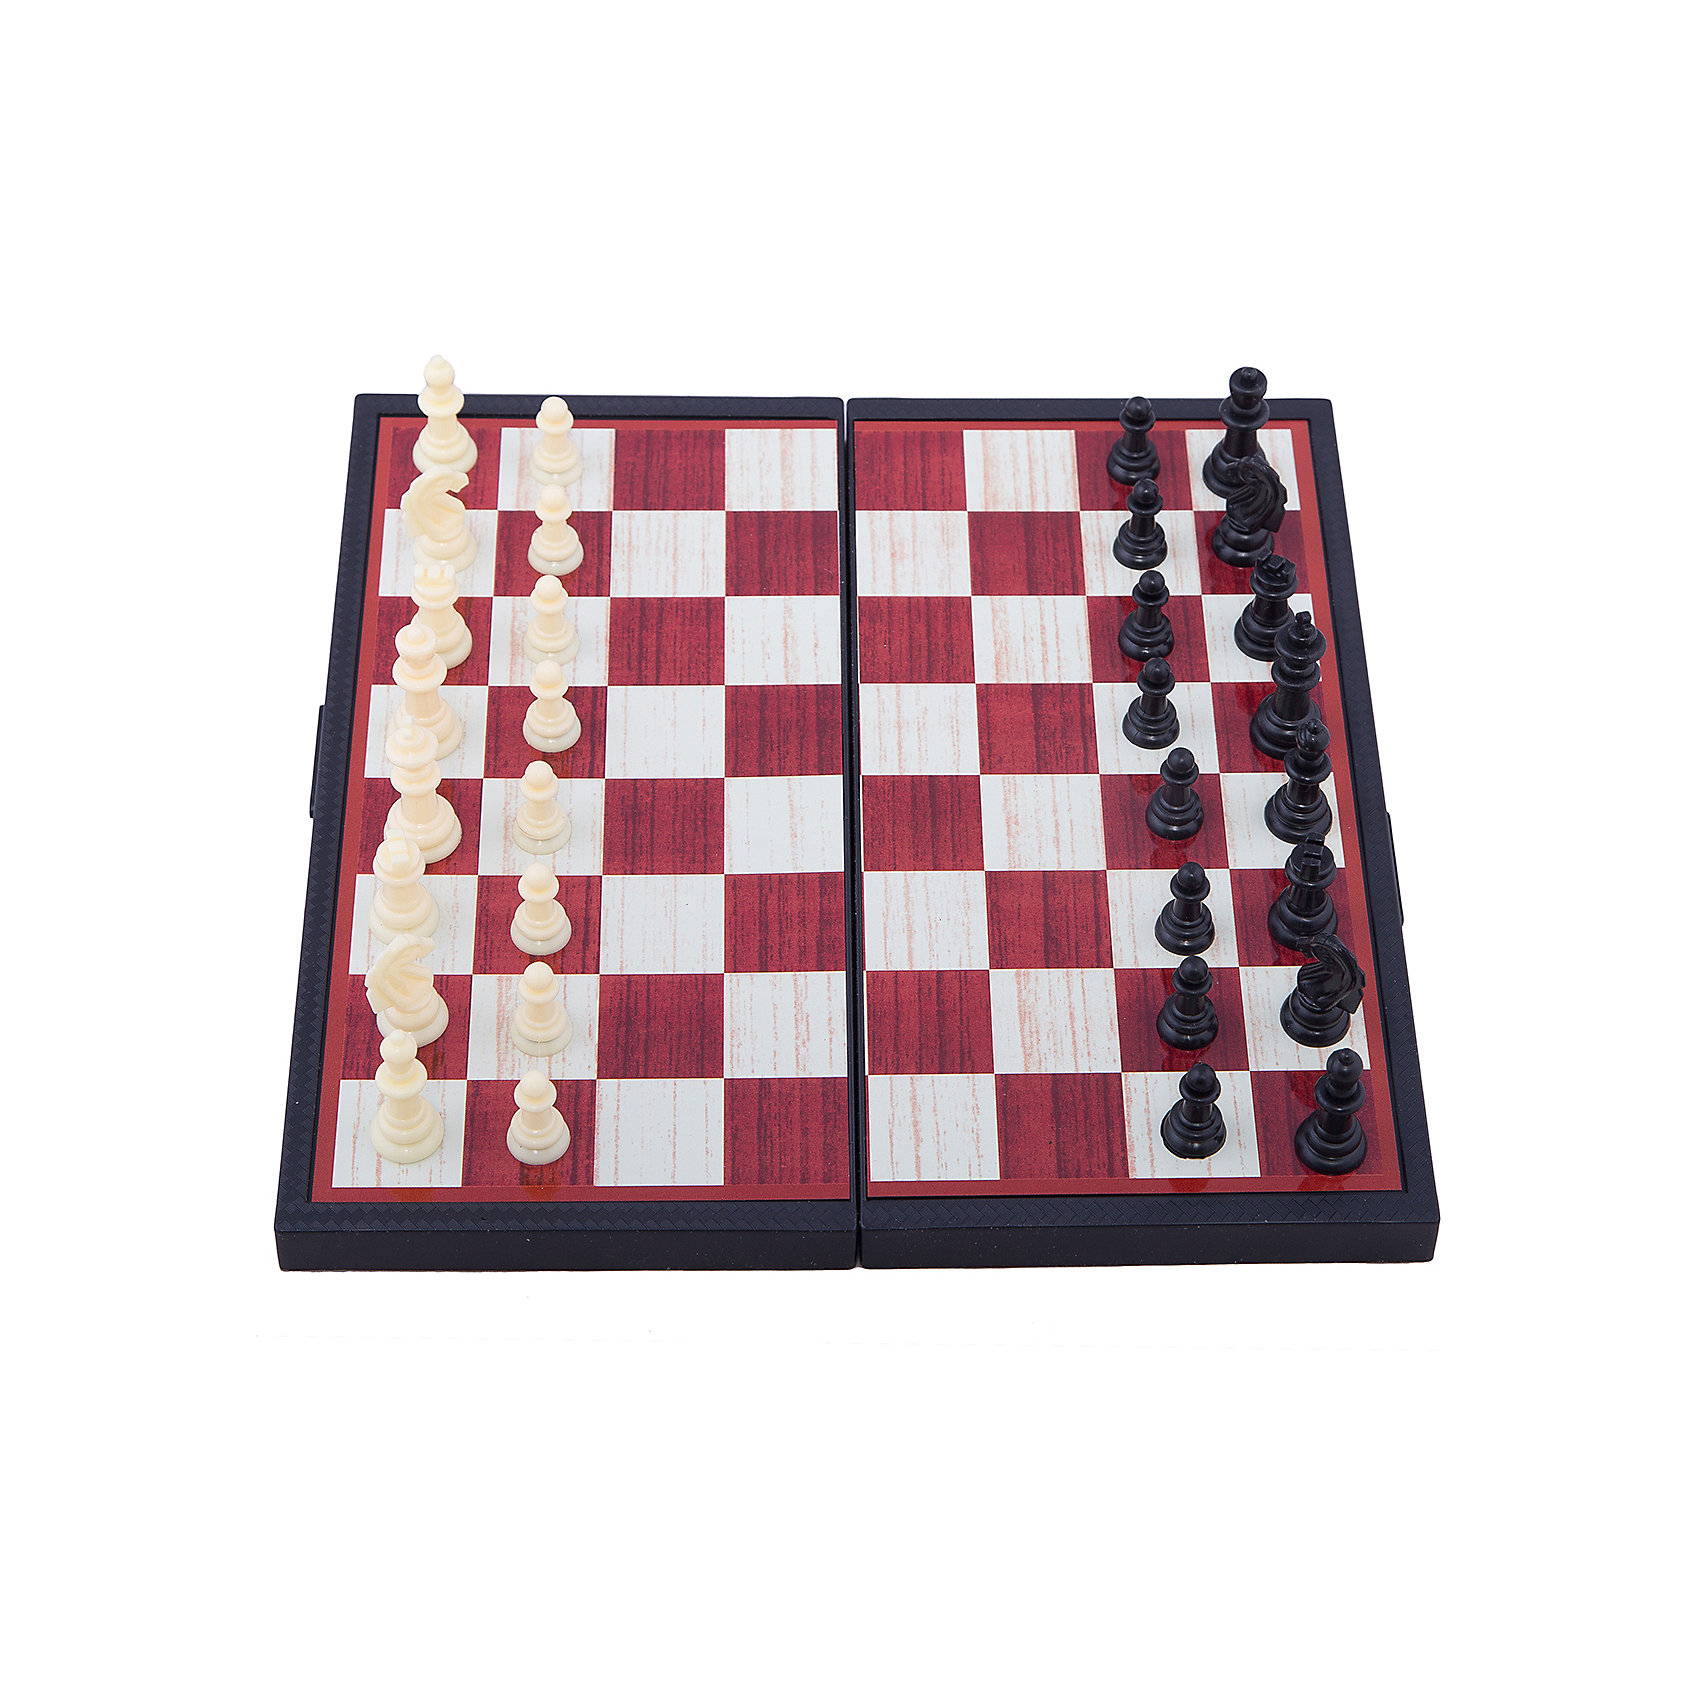 Шахматы том 1. Шахматы магнитные играем вместе шахматы шашки нарды 3в1 Симбат. Шахматы шашки нарды 3 в 1 магнитные. Шахматы магнитные 3in1 Chess Set 32x32. Шахматы магнитные "играем вместе" 3 в 1.